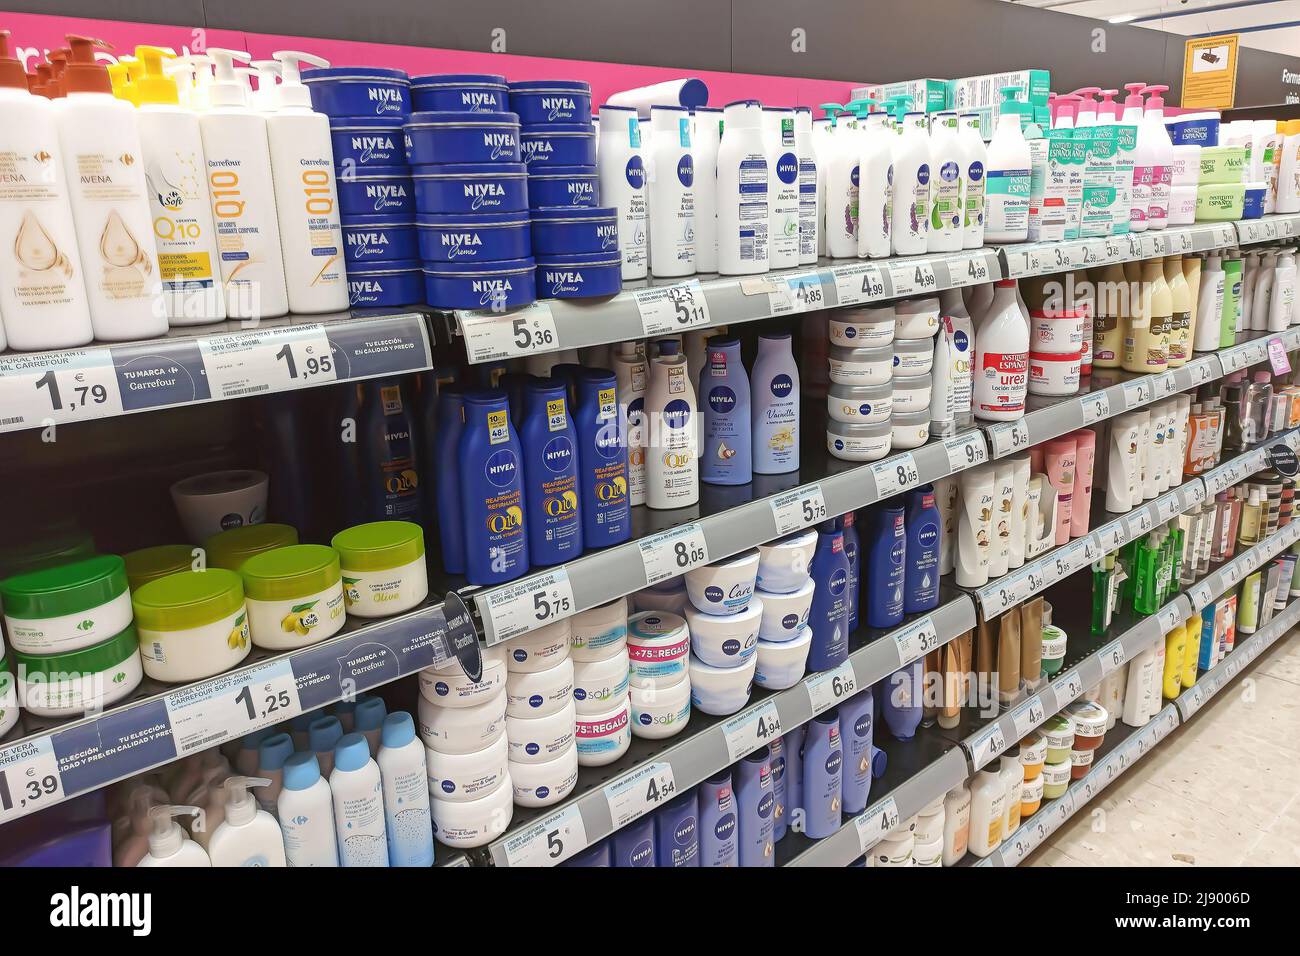 Huelva, Spain - May 10, 2022: Nivea body Milk bottles in a Shelf of a supermarket Stock Photo